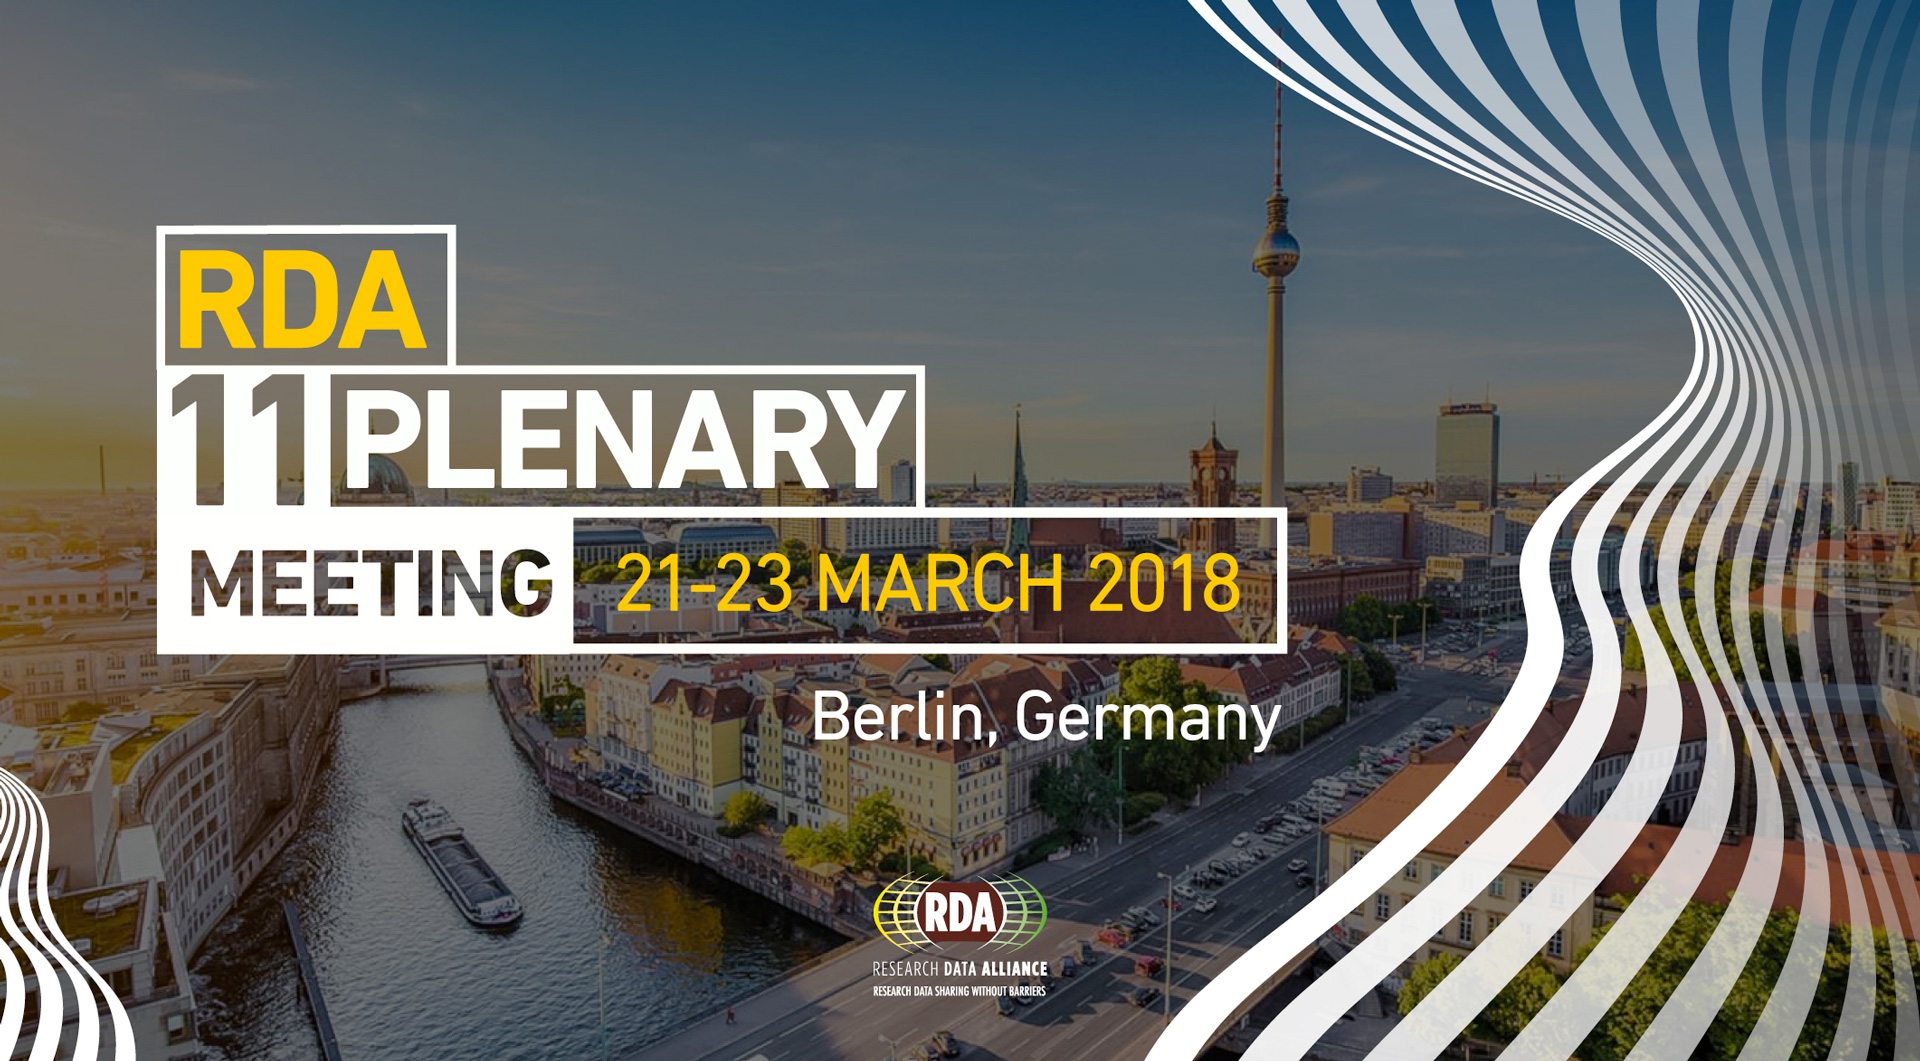 RDA 11th Plenary Meeting (21-23 March 2018, Berlin, Germany)